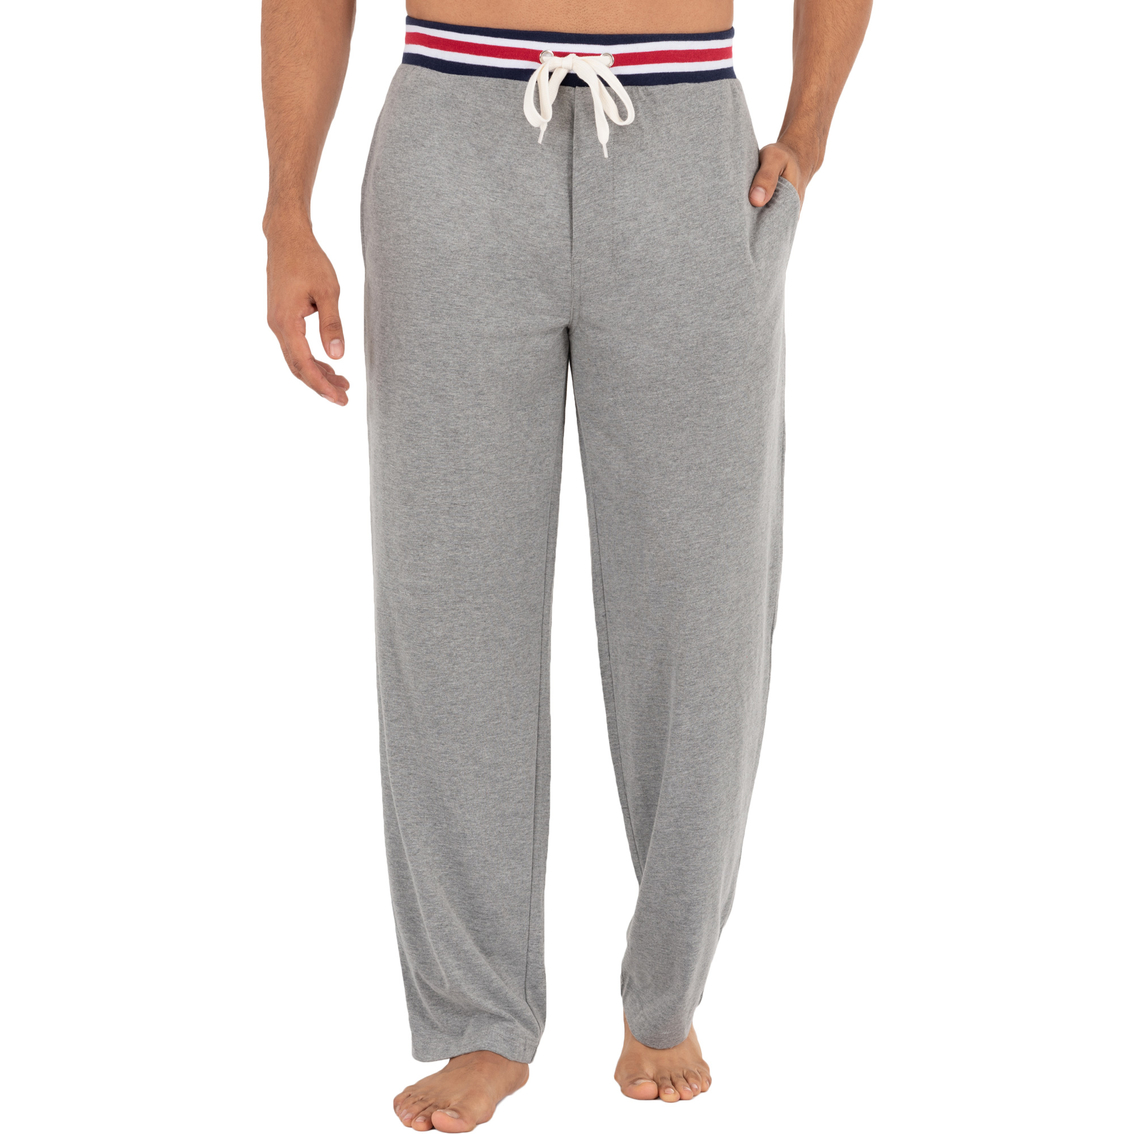 Izod Sueded Jersey Sleep Pants | Pajamas & Robes | Clothing ...